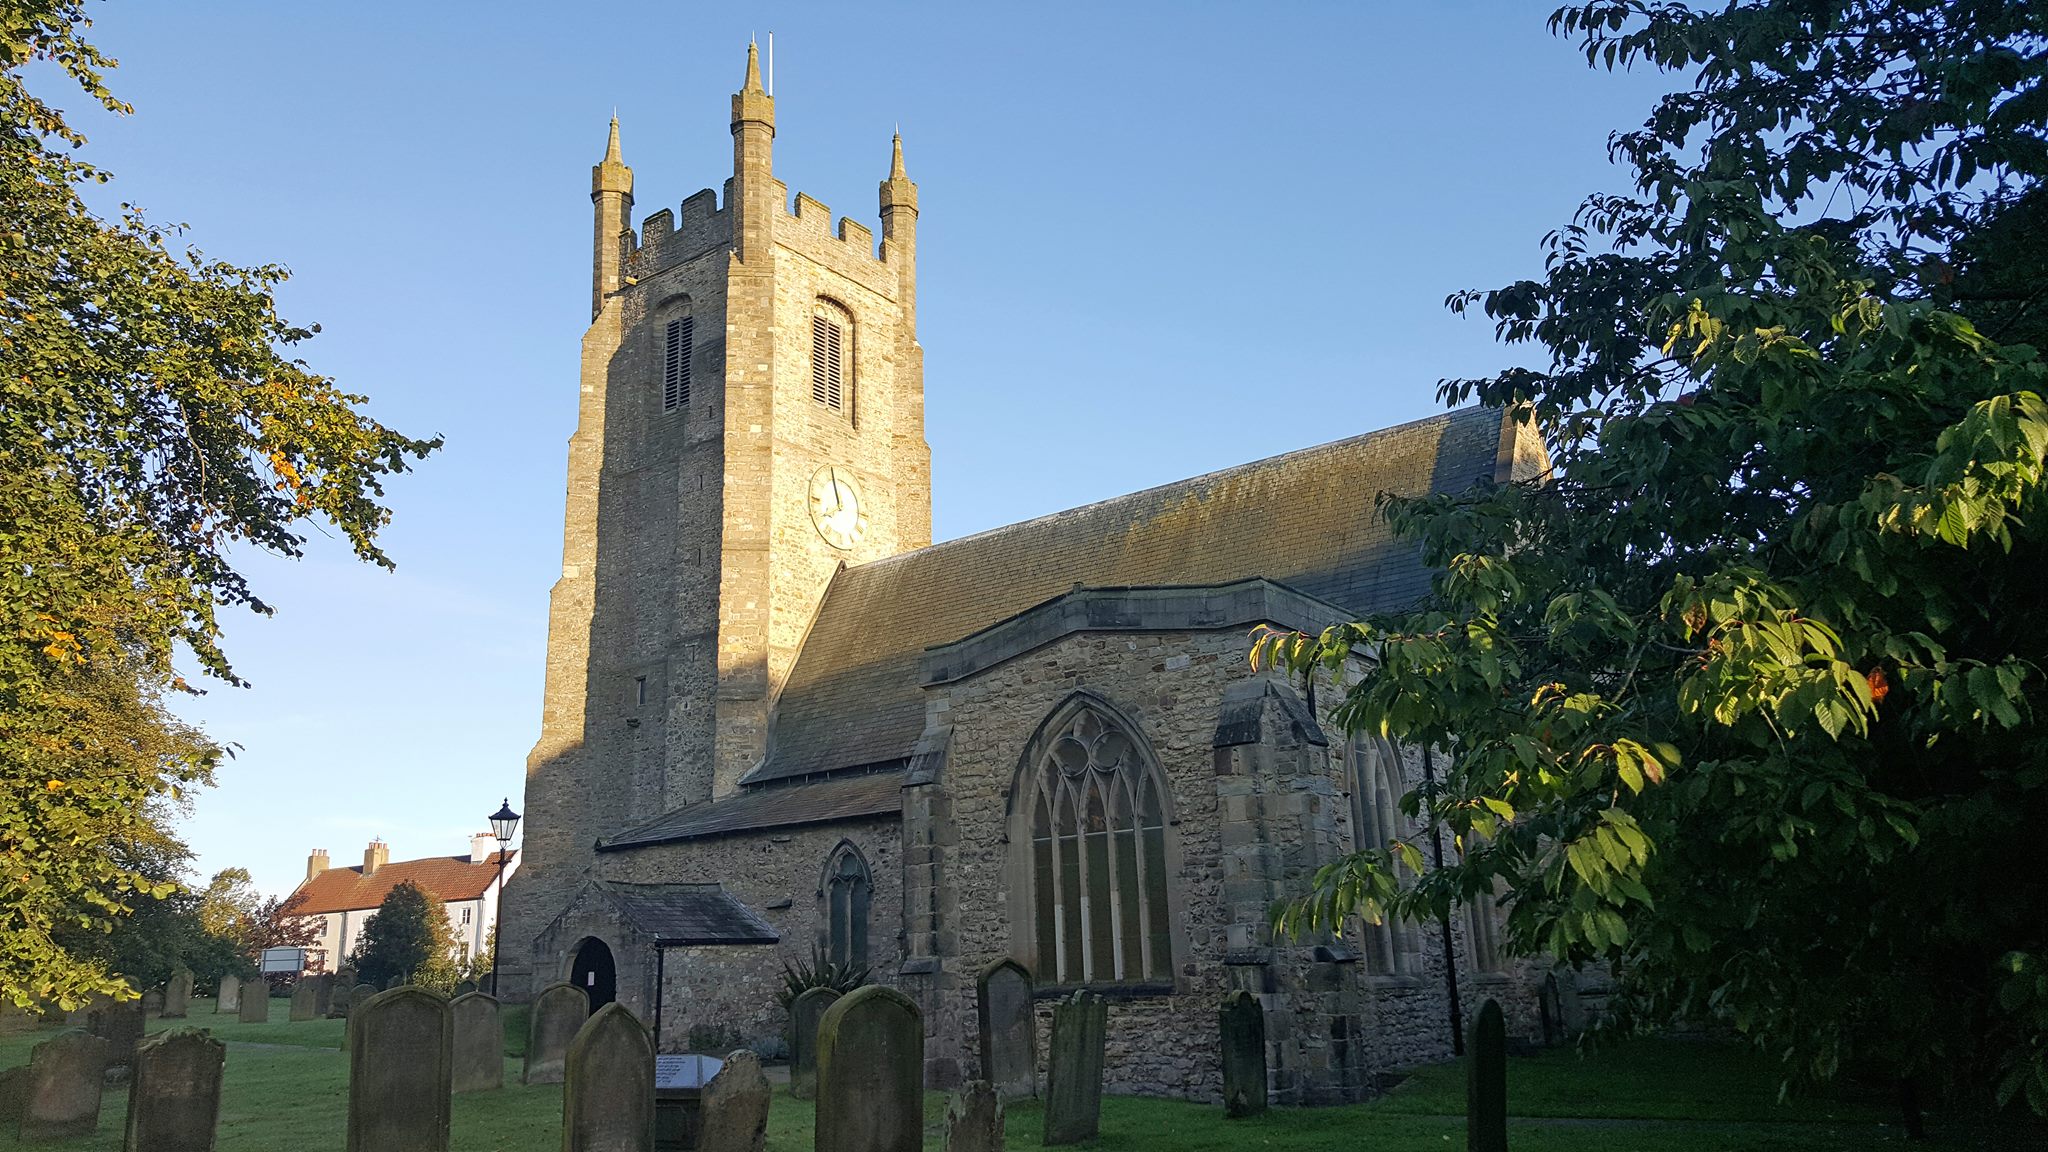 St. Edmund's Church dominates the centre of Sedgefield